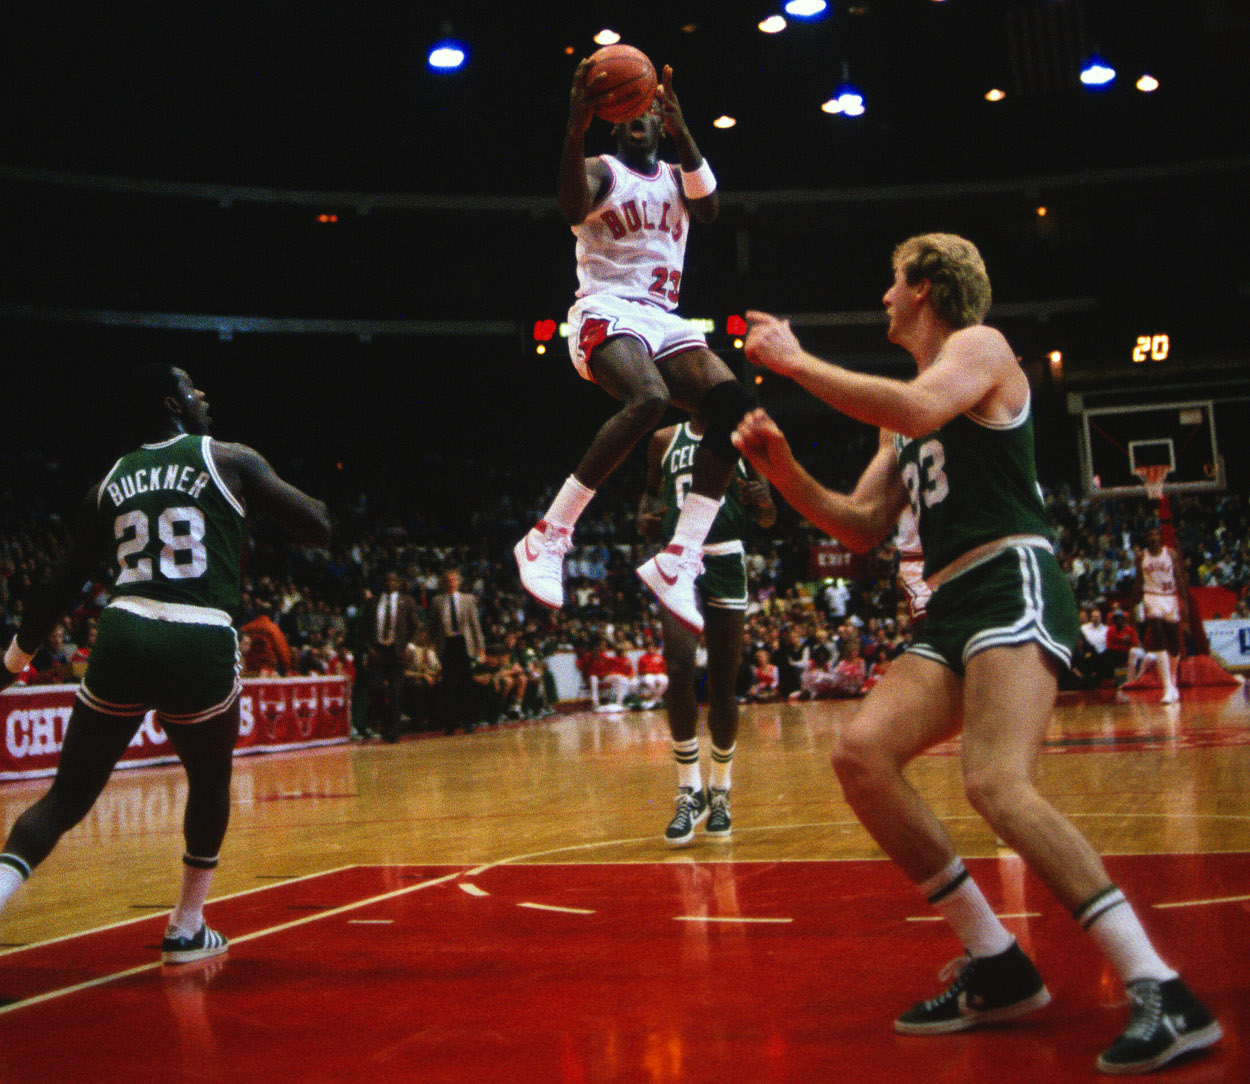 Michael Jordan of the Chicago Bulls